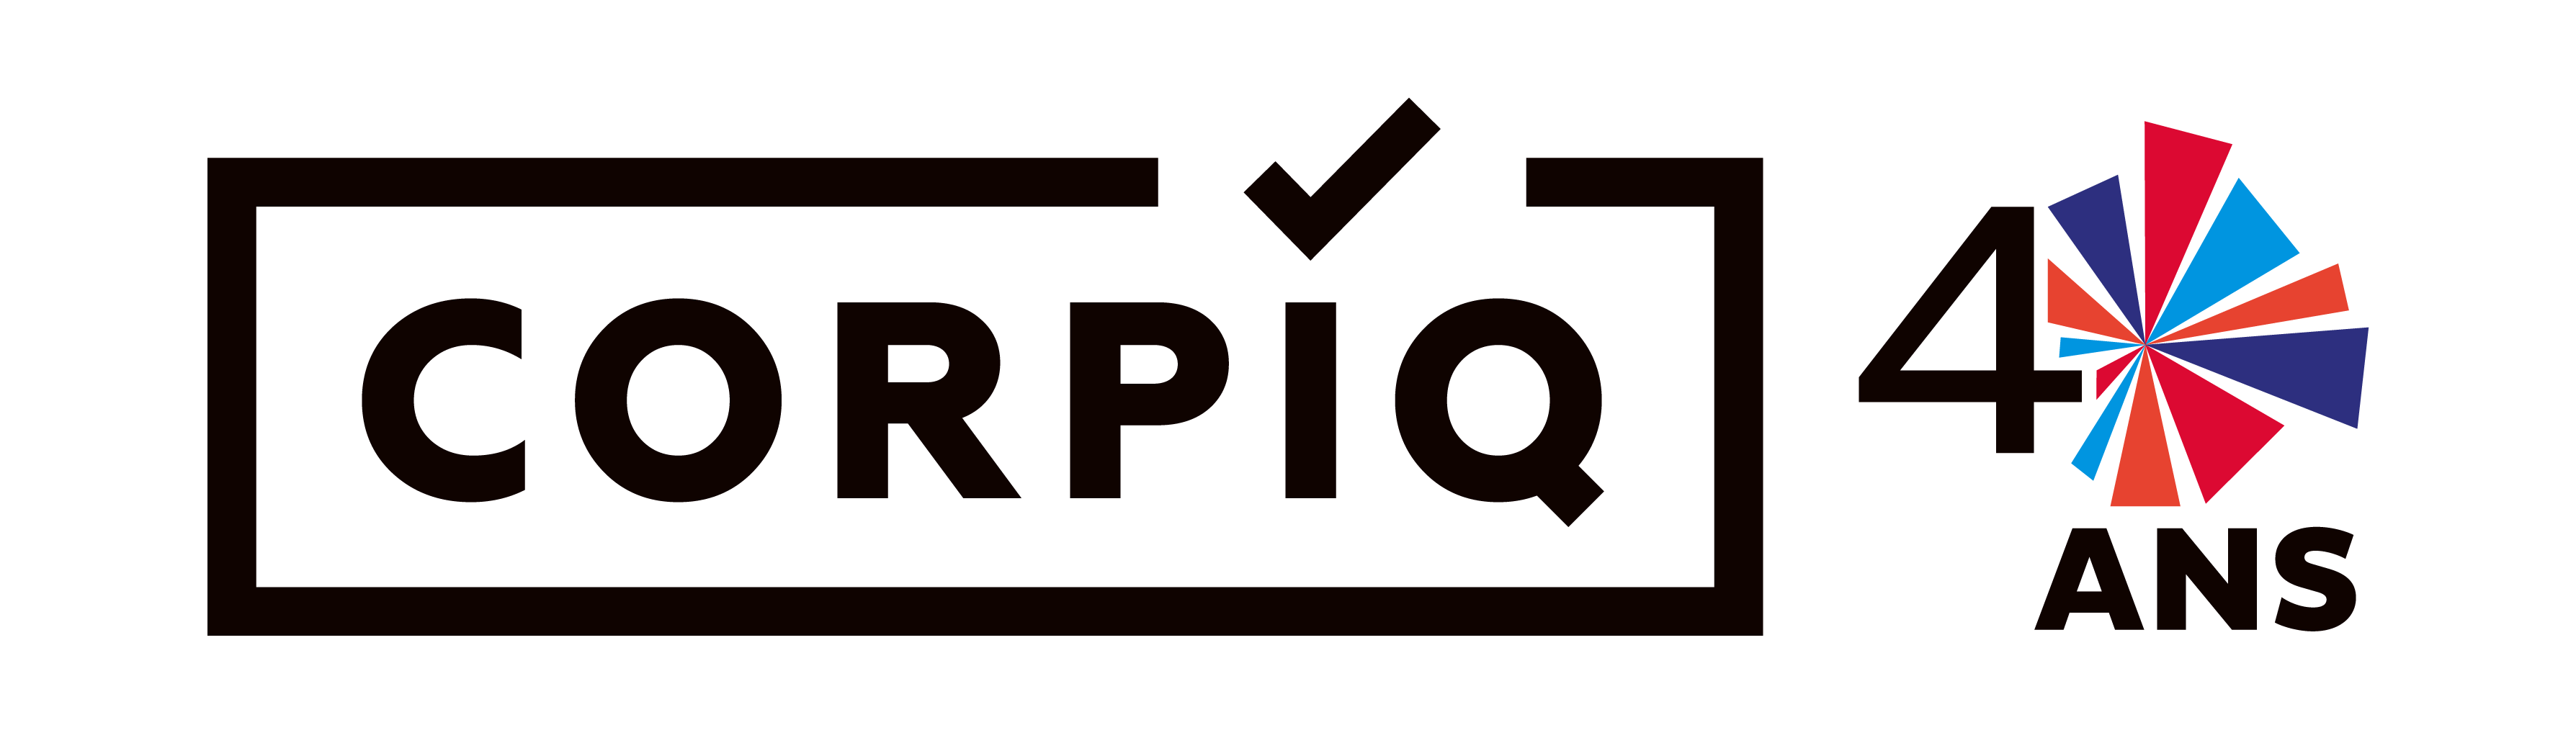 Logo 40 ans CORPIQ